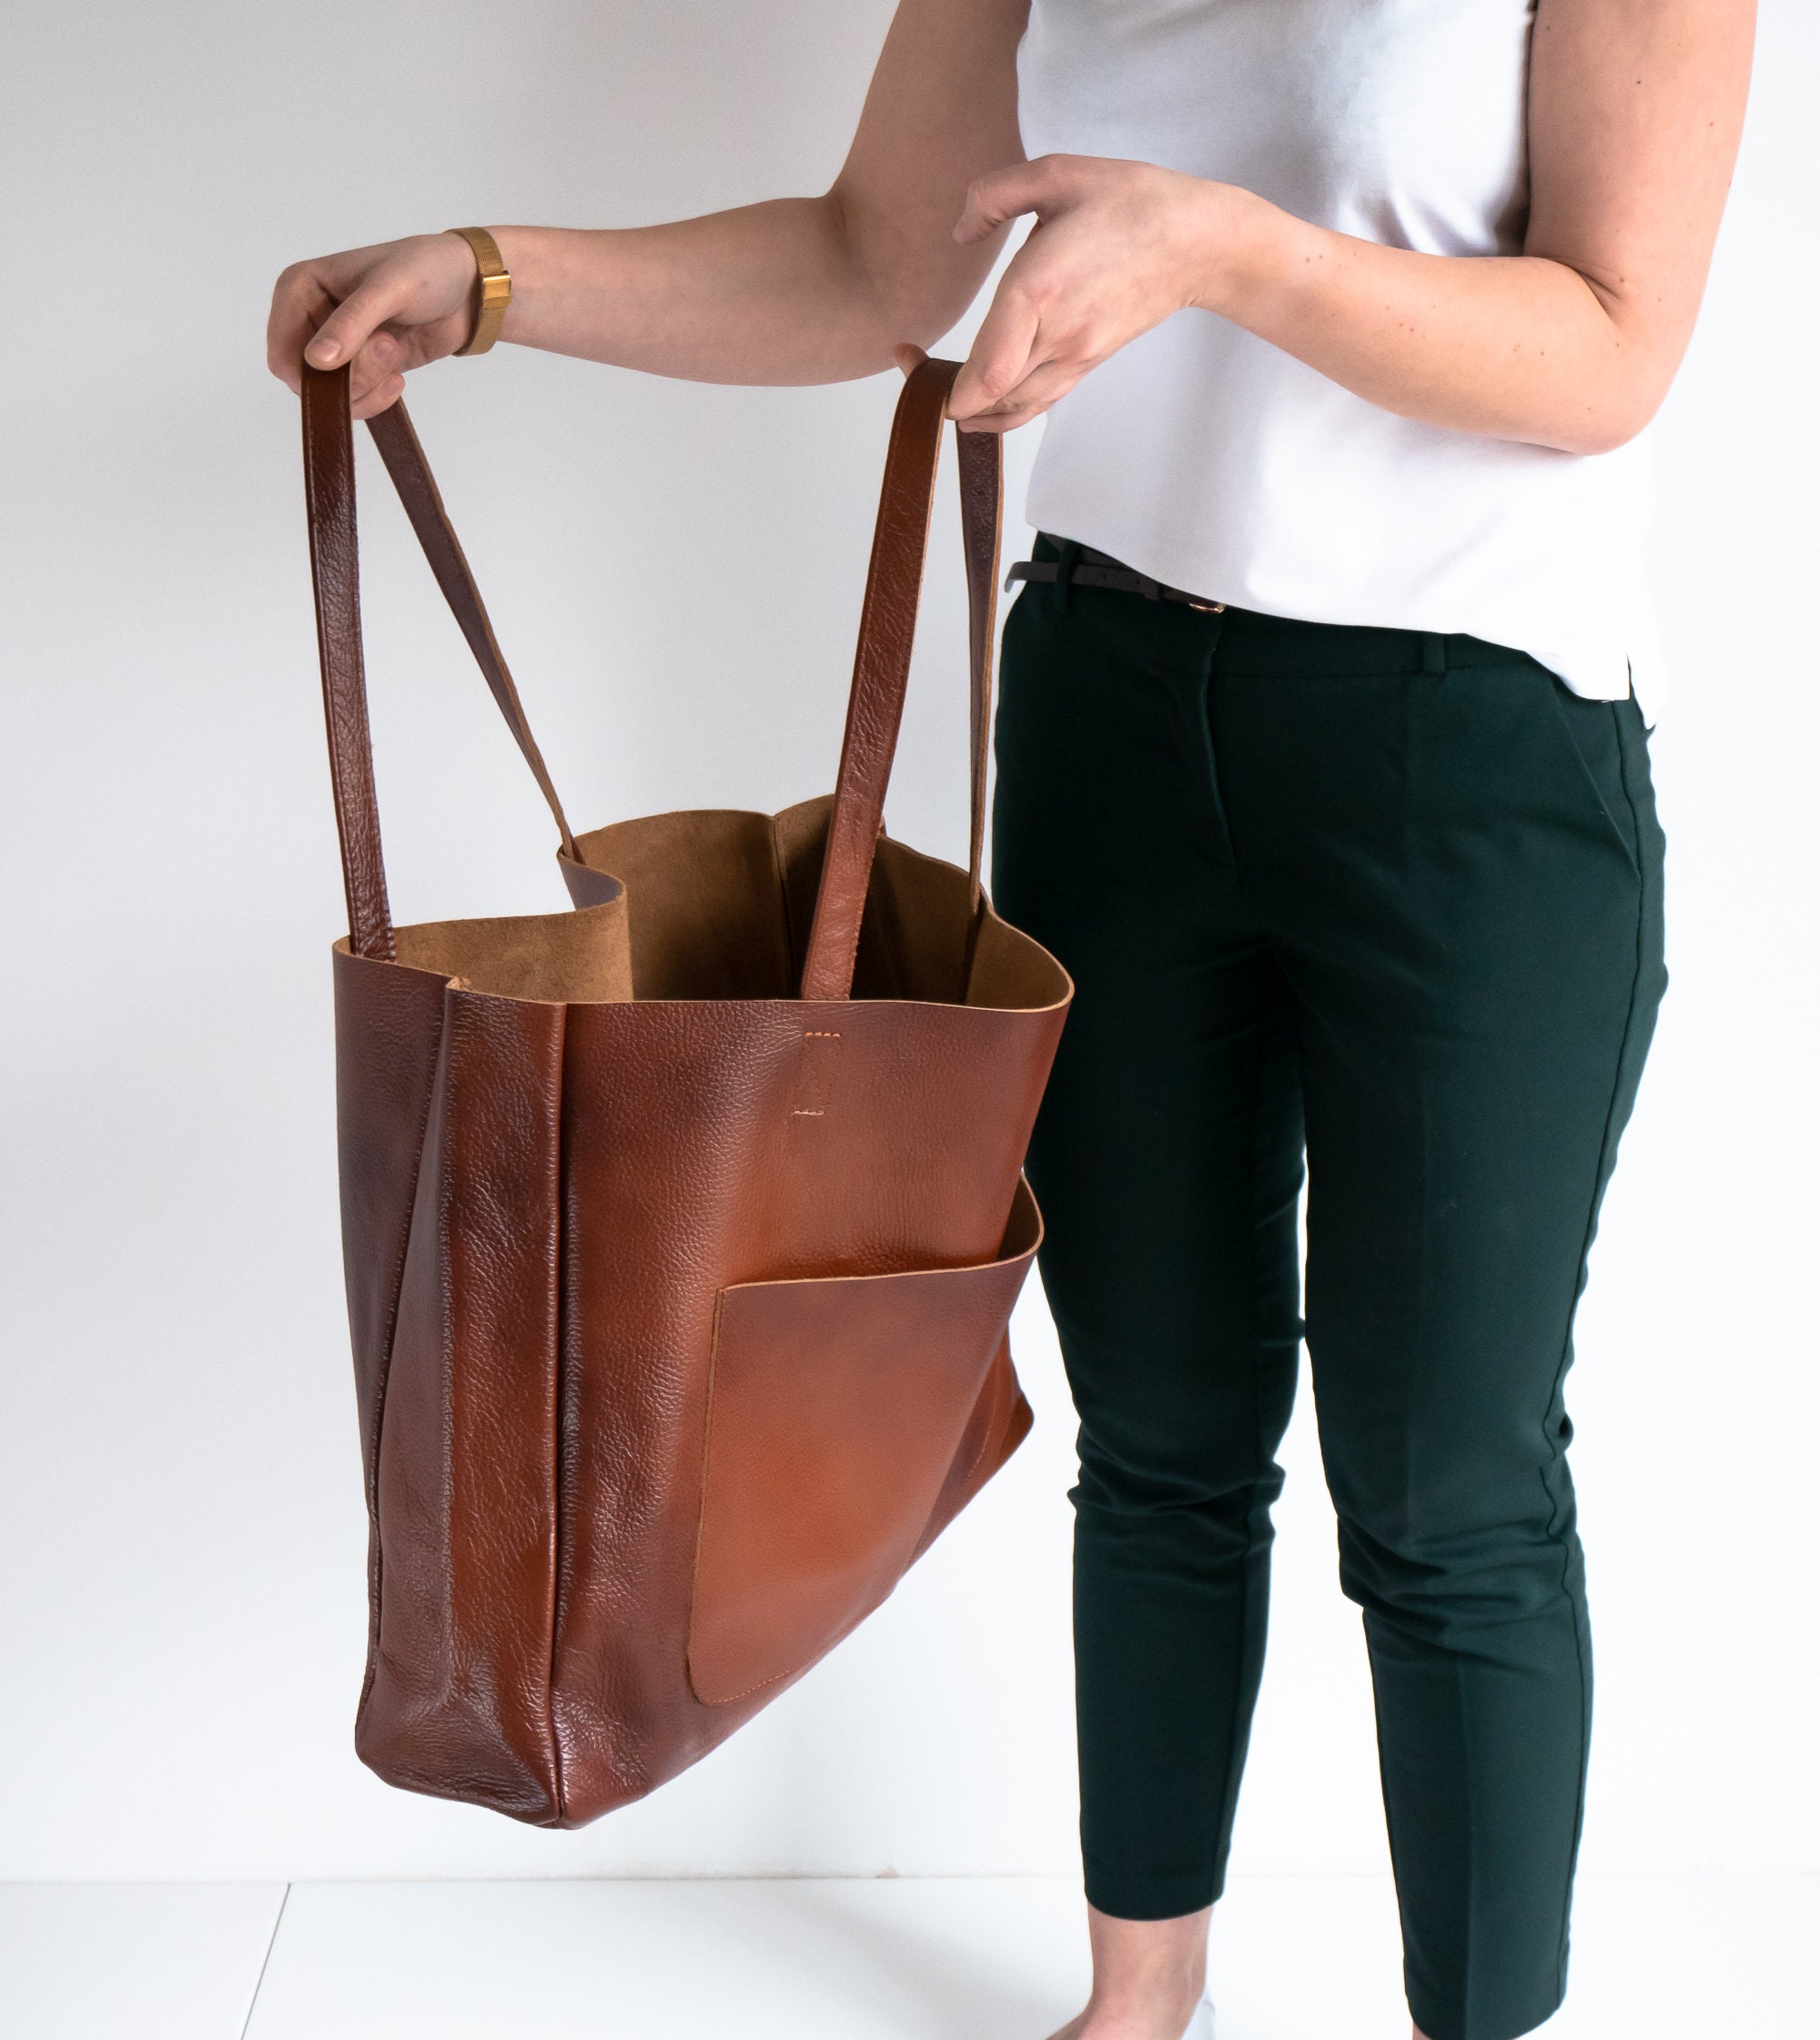 Cognac BROWN OVERSIZE SHOPPER Bag Large Leather Tote Bag 